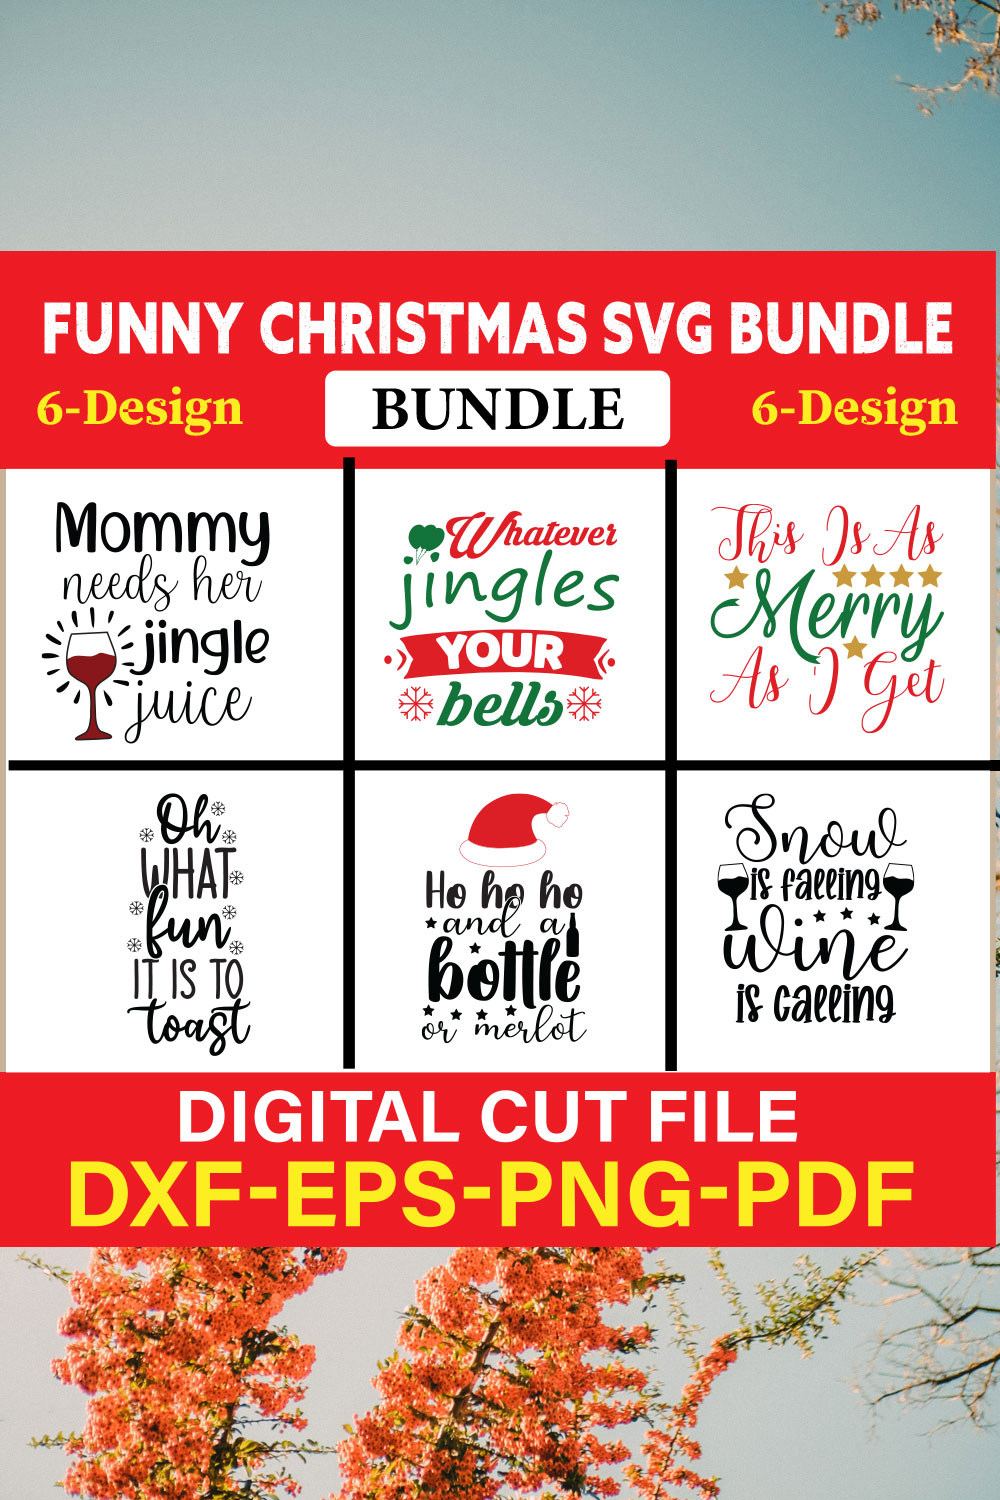 Christmas SVG Bundle / Funny Christmas SVG / Cut File Vol-04 pinterest preview image.